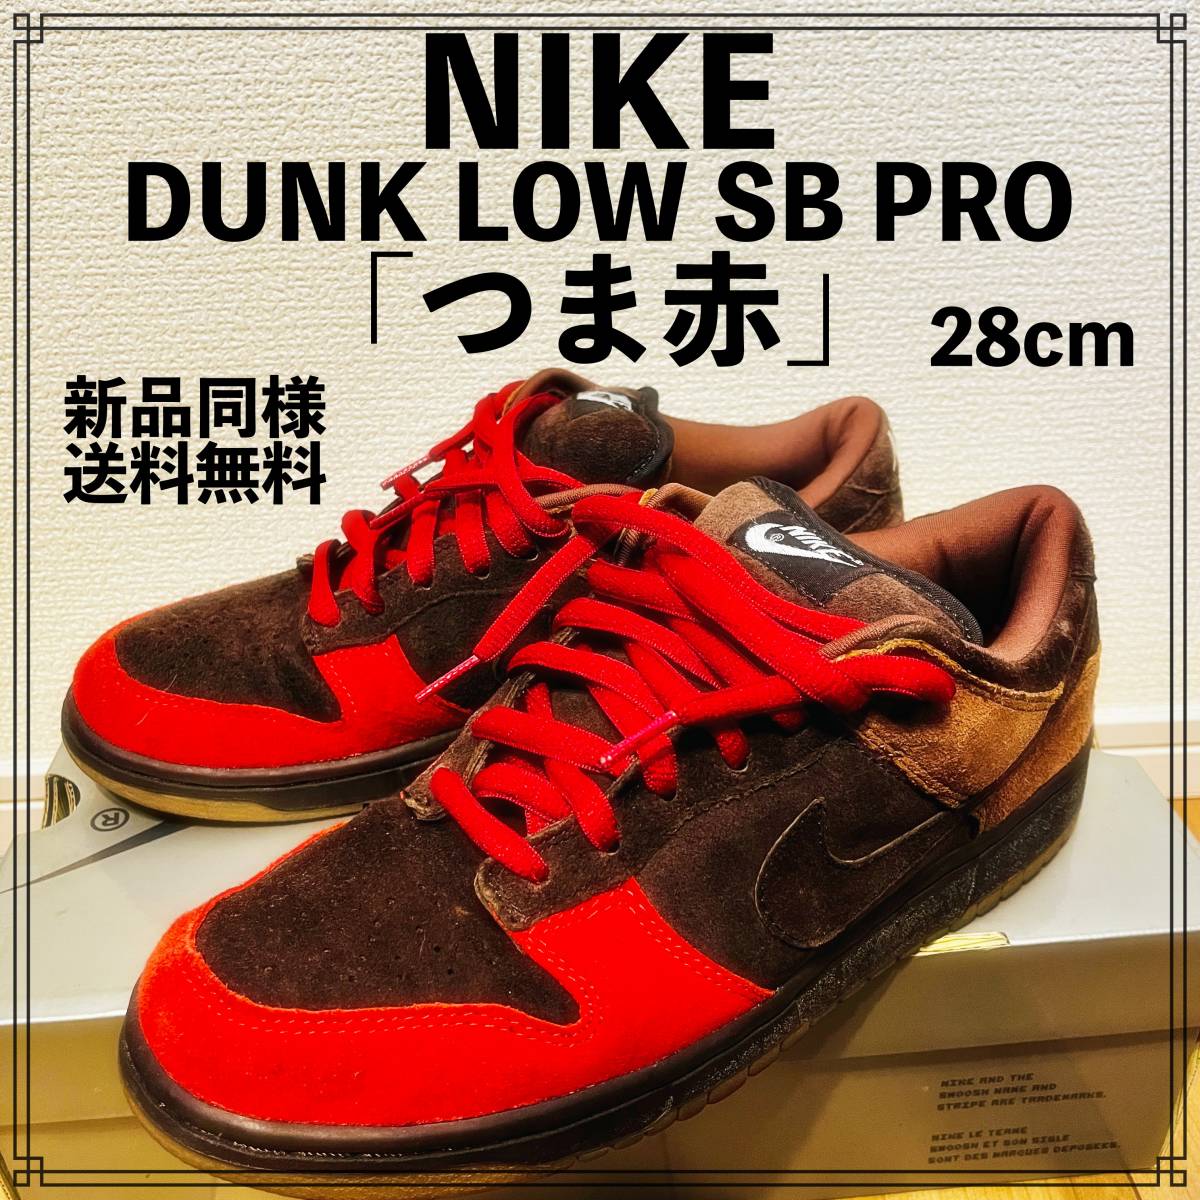 NIKE DUNK LOW SB PRO「つま赤」28cm ナイキ ダンク | www.myglobaltax.com